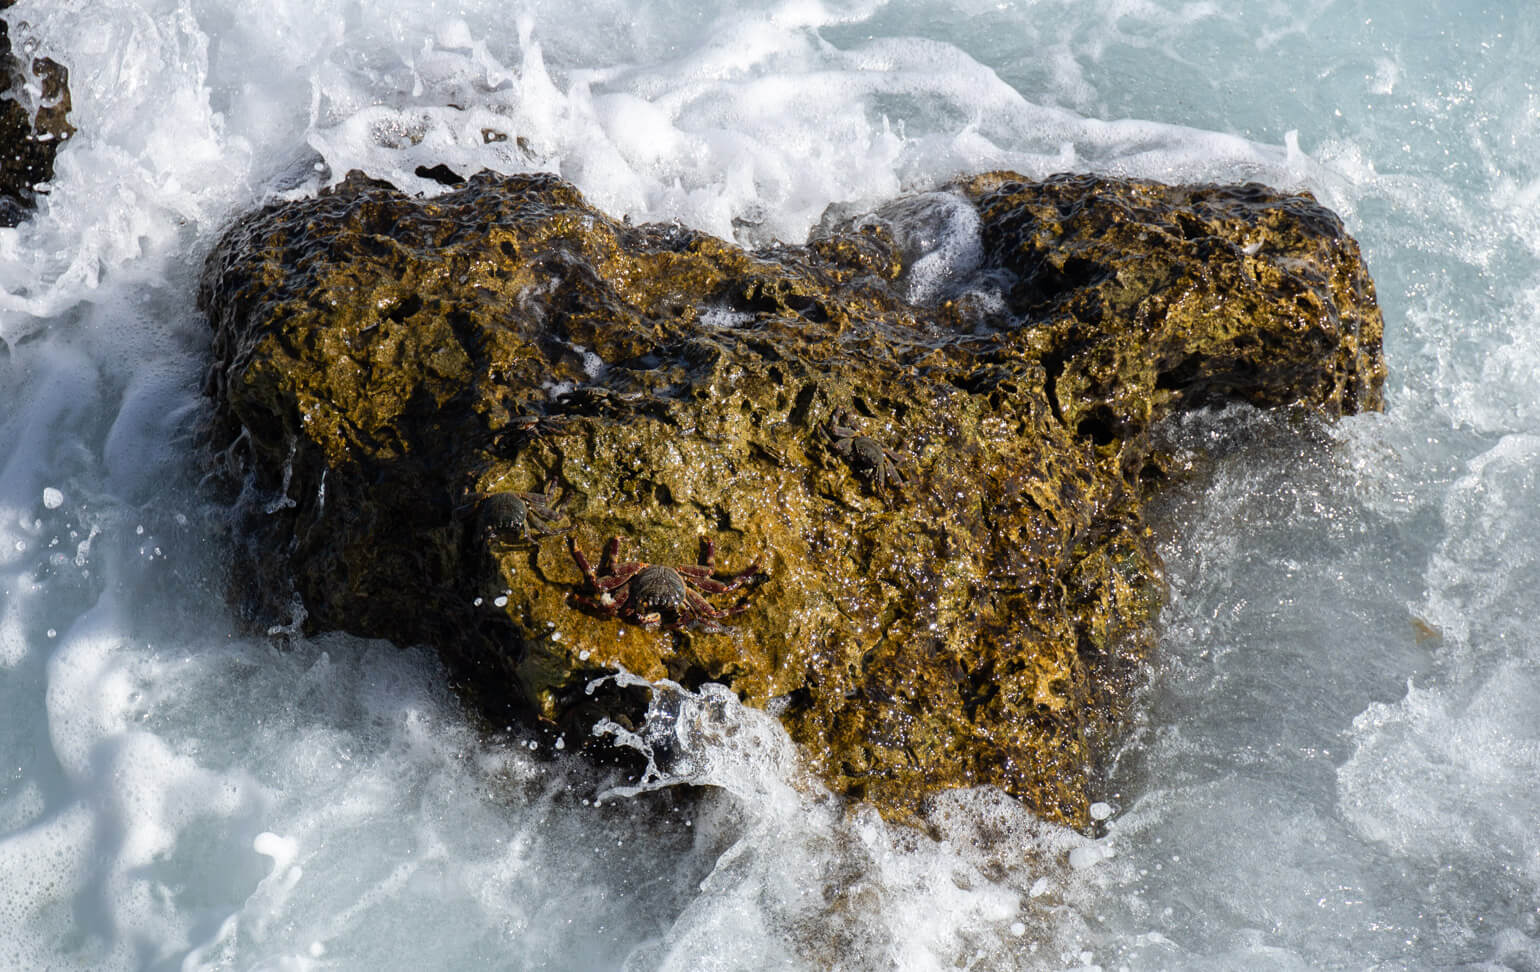 Crabs on a rock in Nauru.